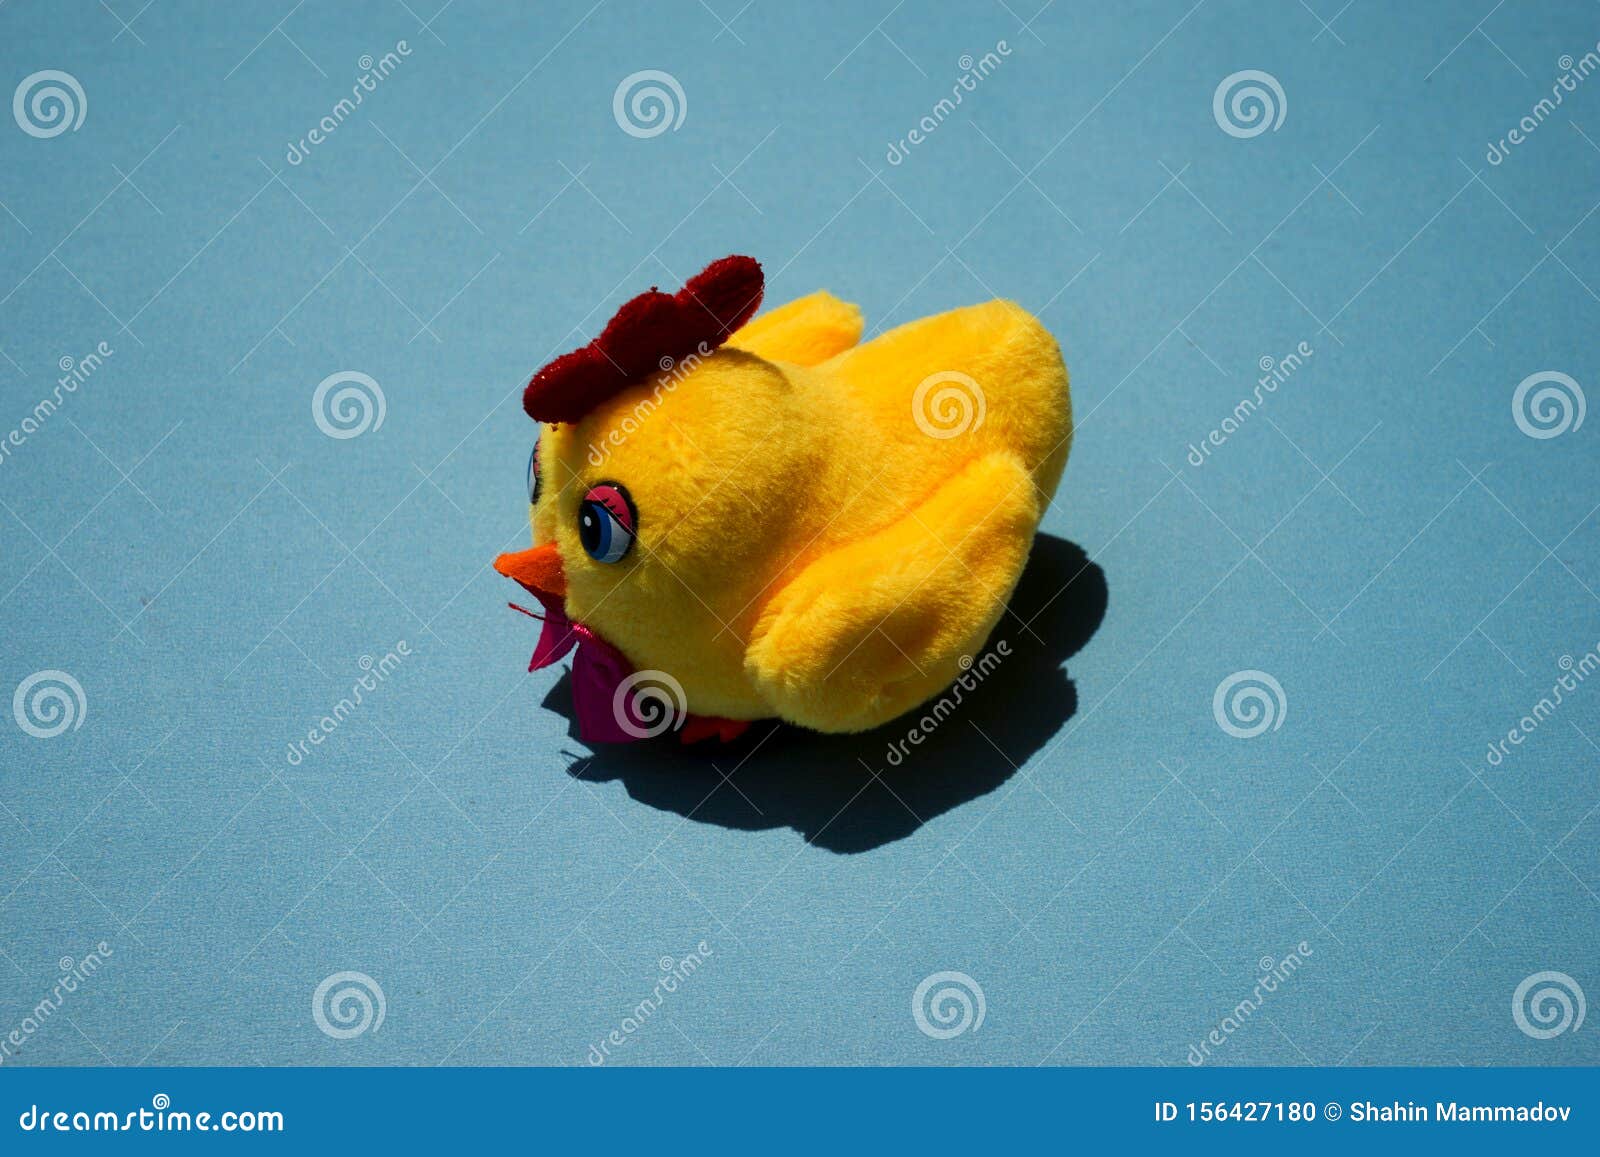 shrilling chicken squeaky toy . toy rubber shriek yellow chicken  on blue background.